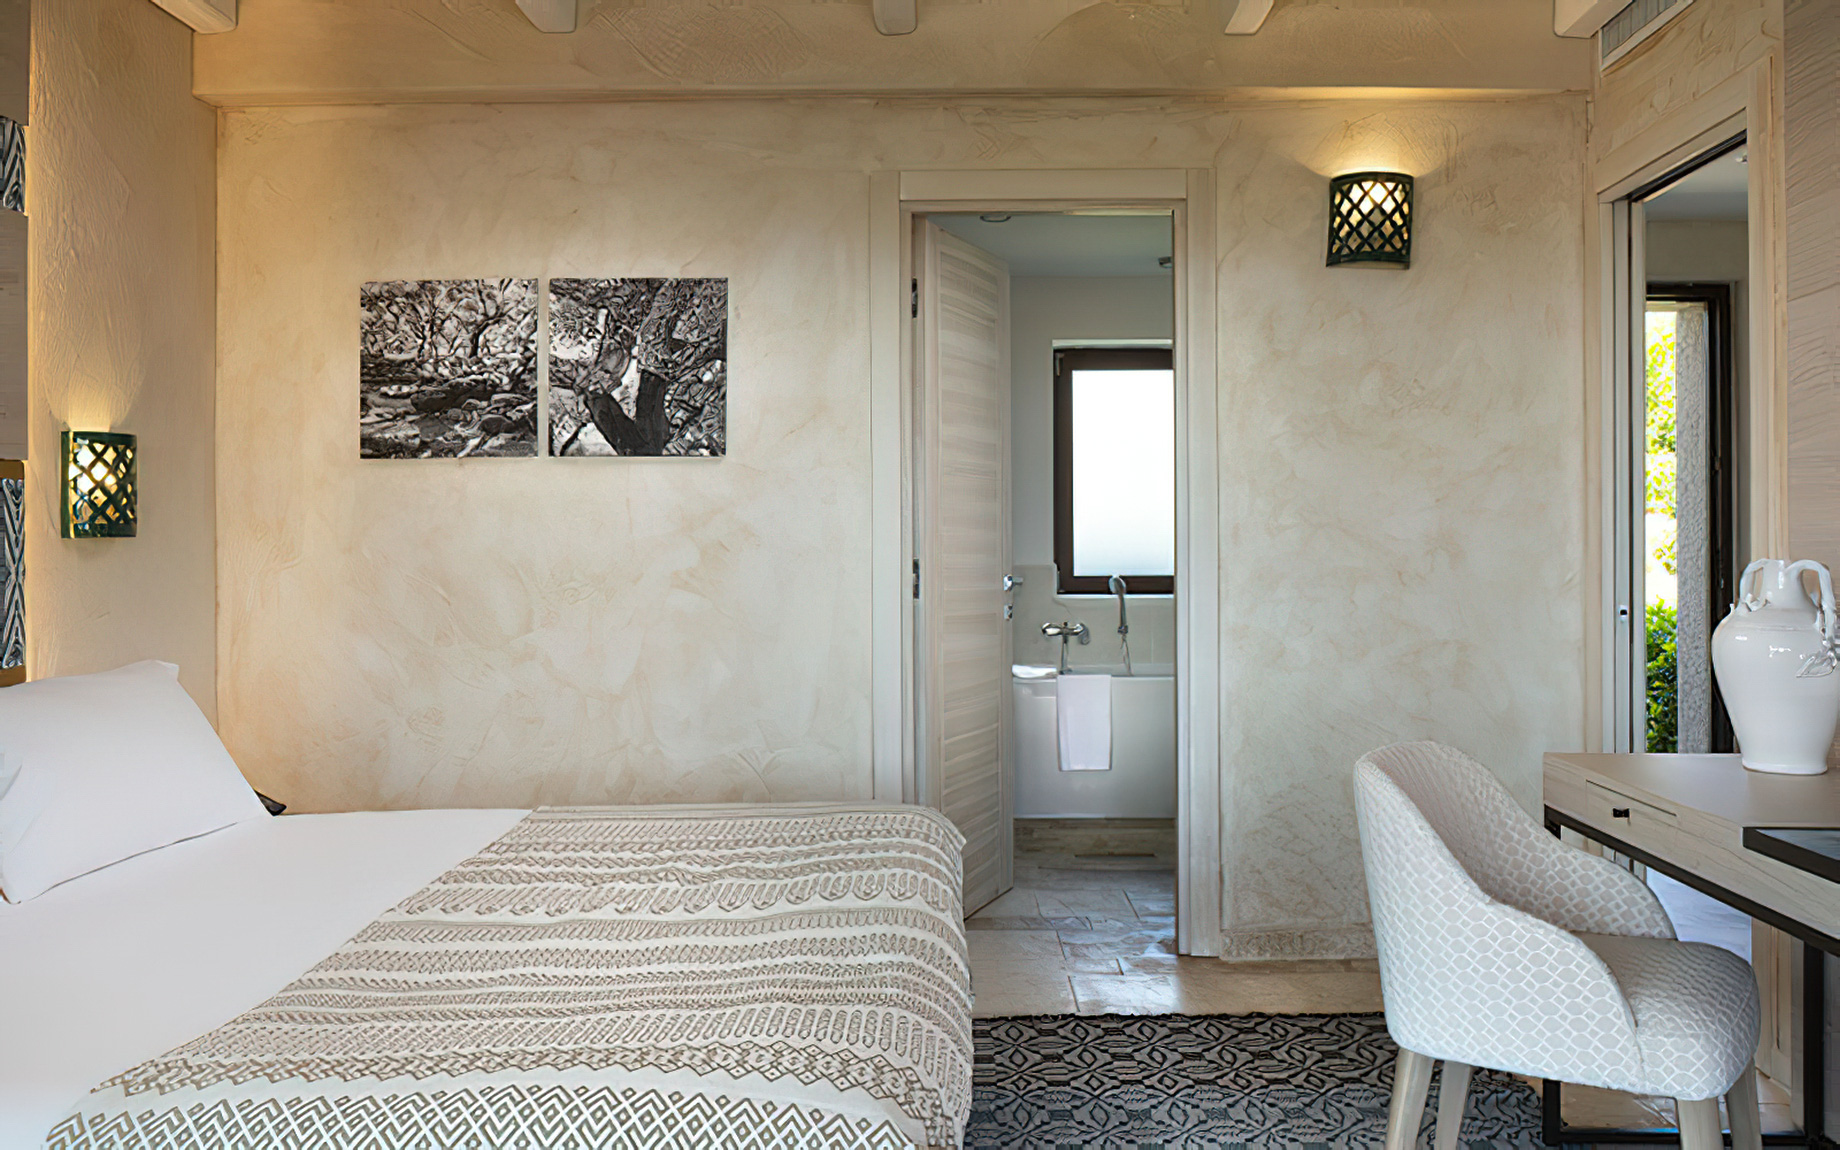 Baglioni Resort Sardinia – San Teodoro, Sardegna, Italy – Maddalena Suite Interior